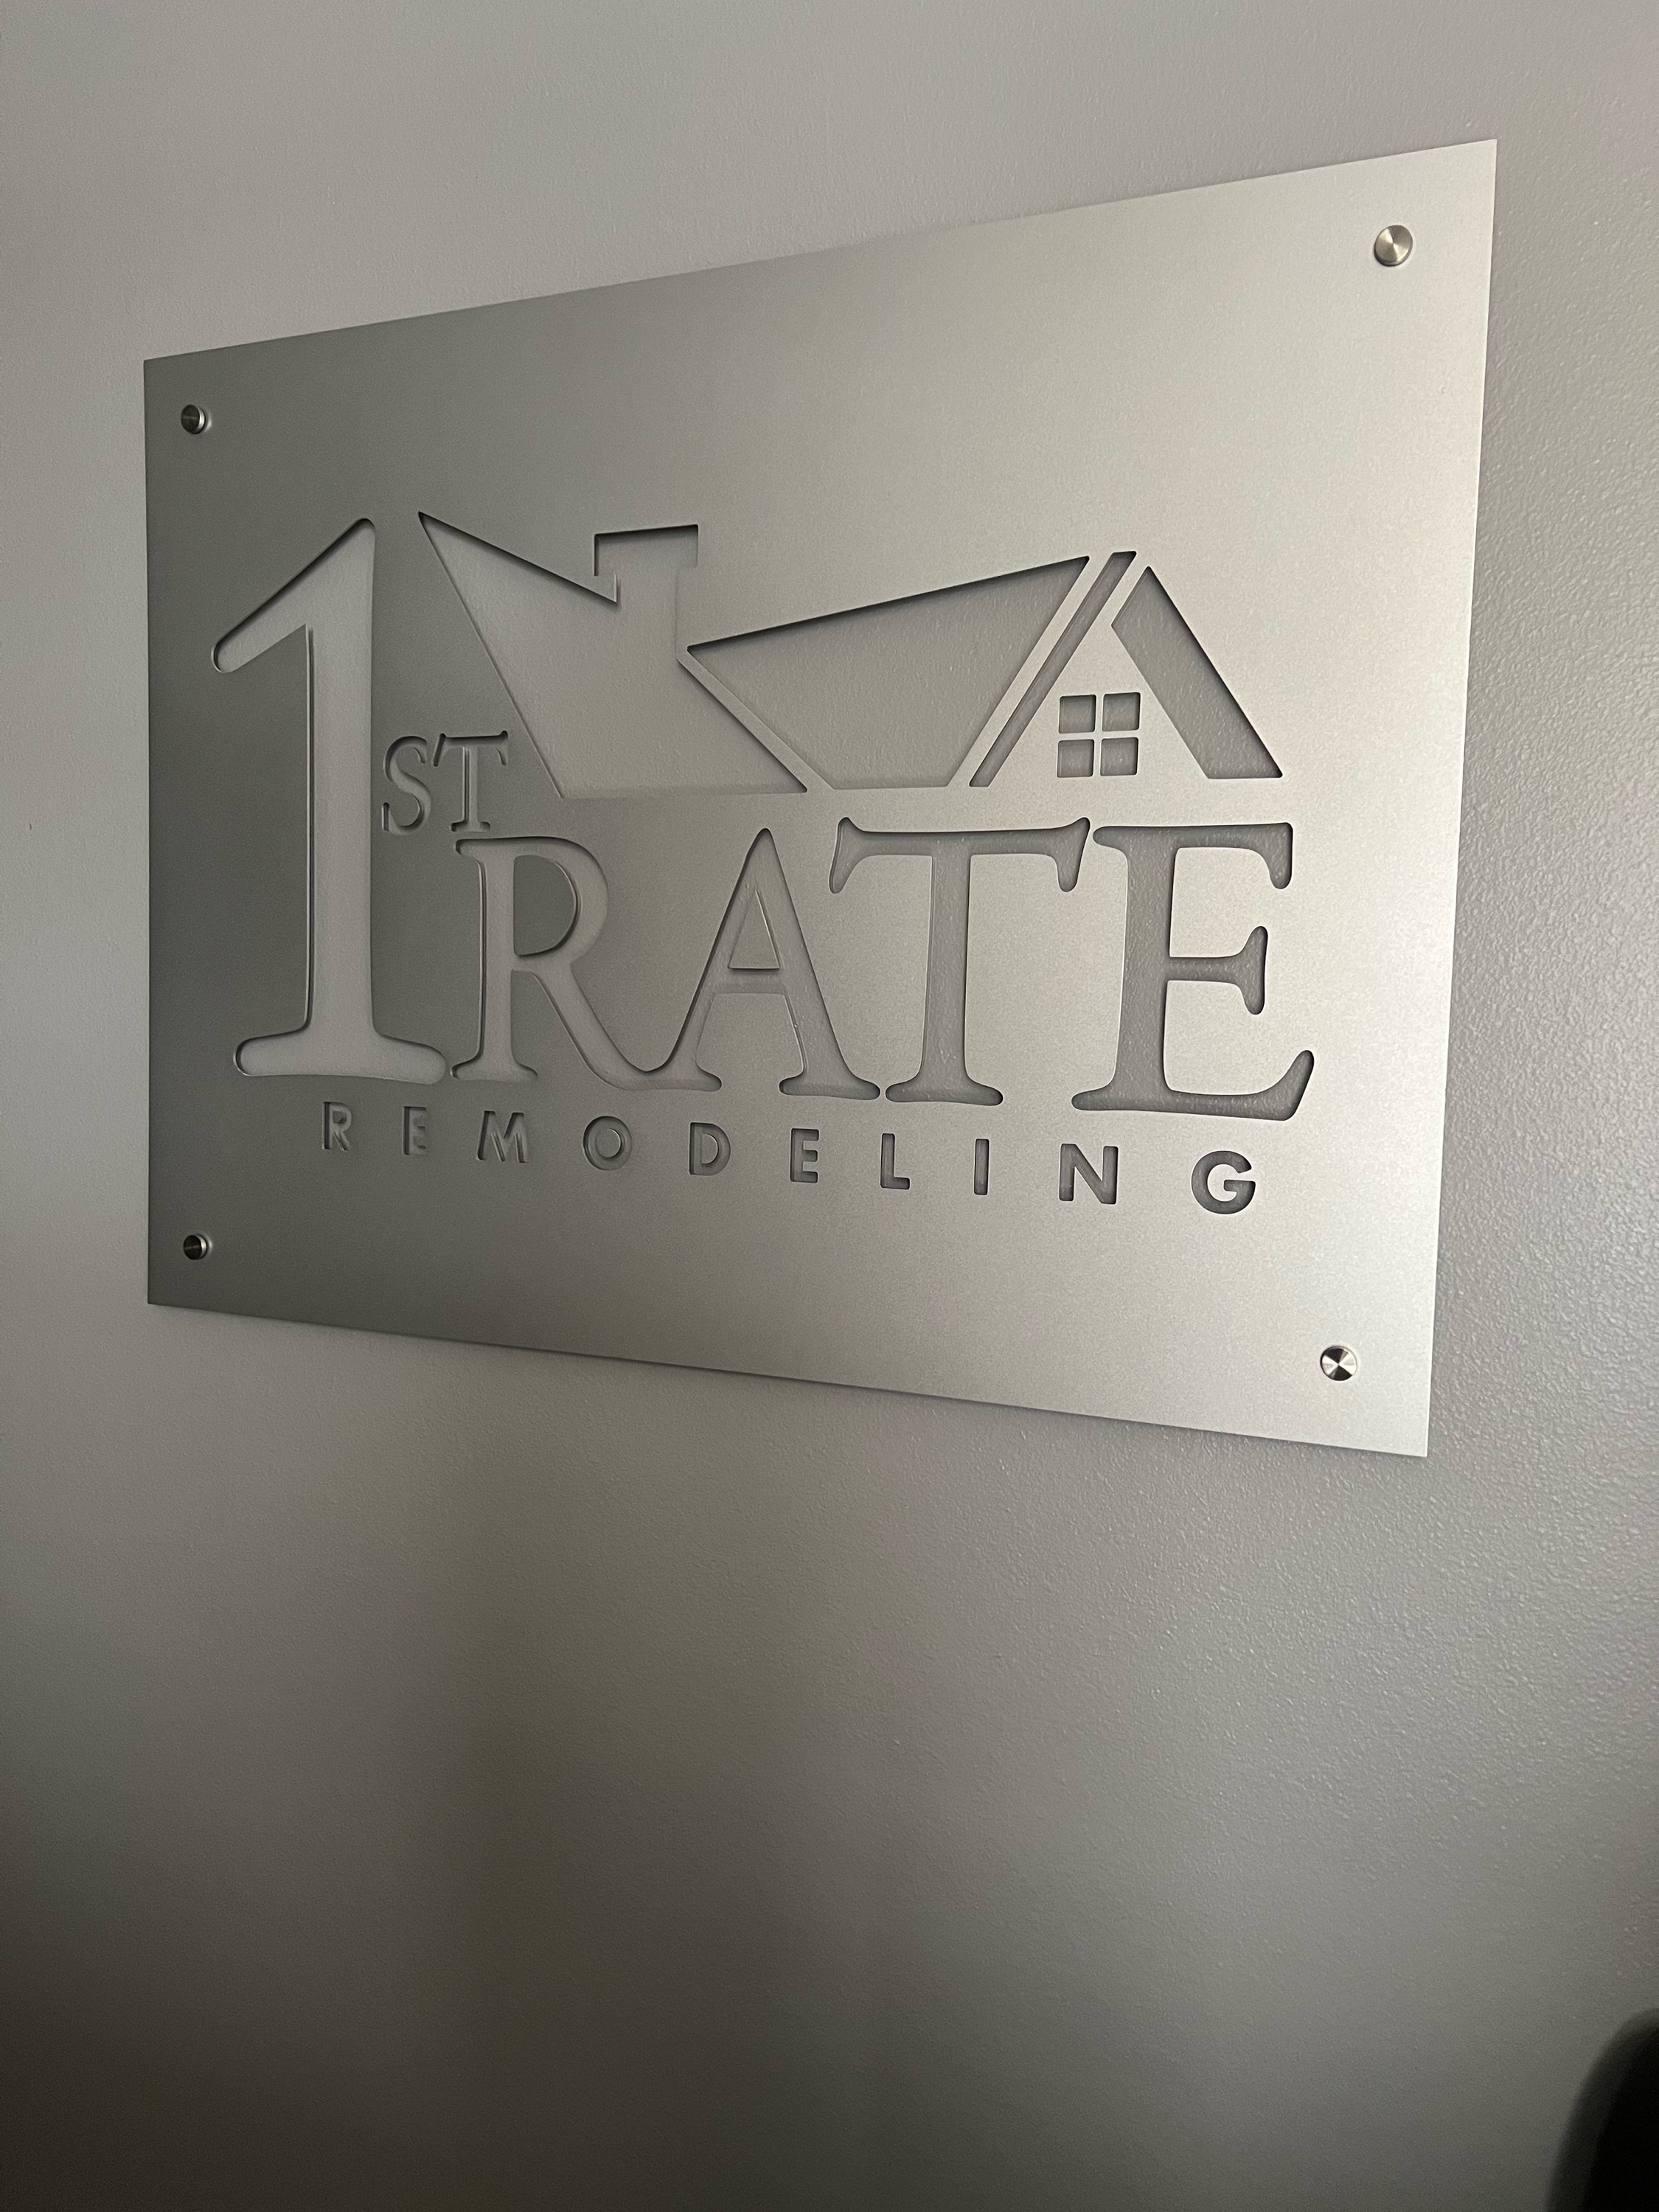 1st Rate Construction, LLC Logo